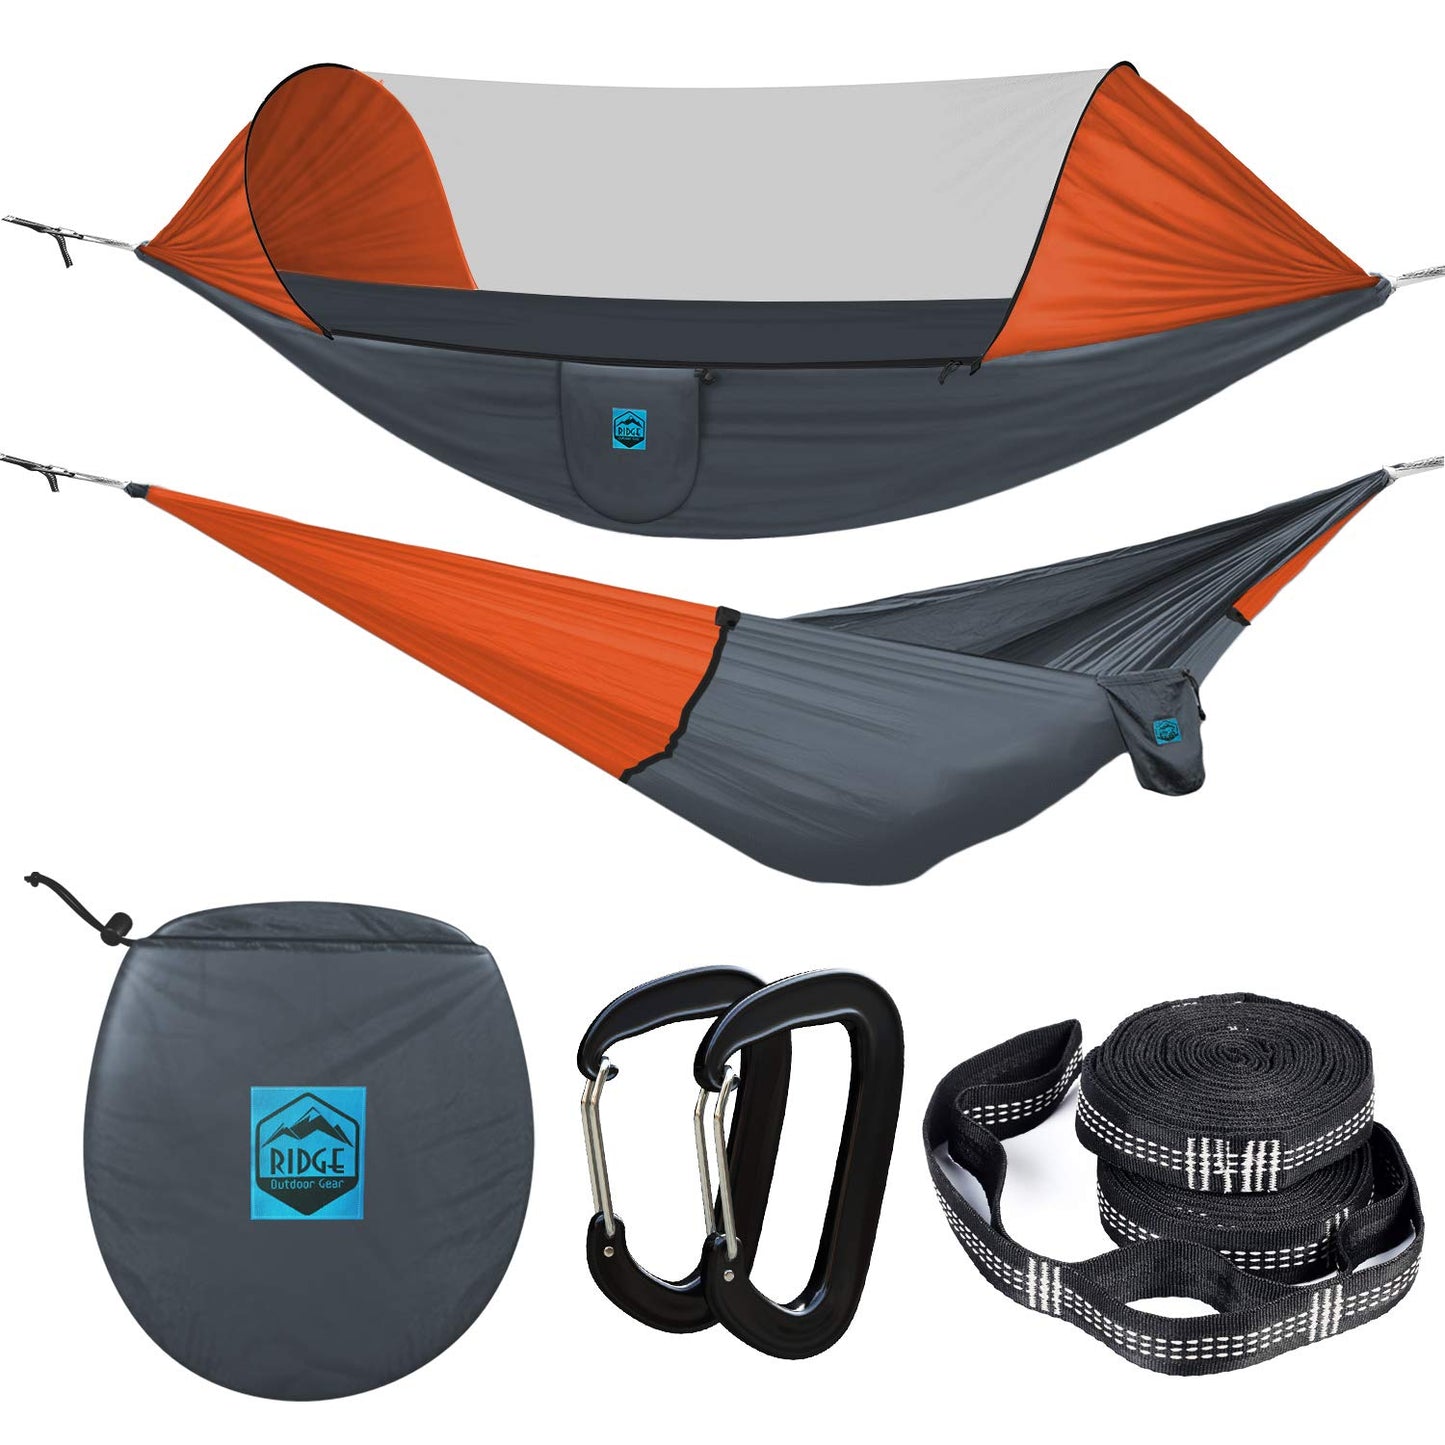 Orange Camping Hammock - Ridge Outdoor Gear